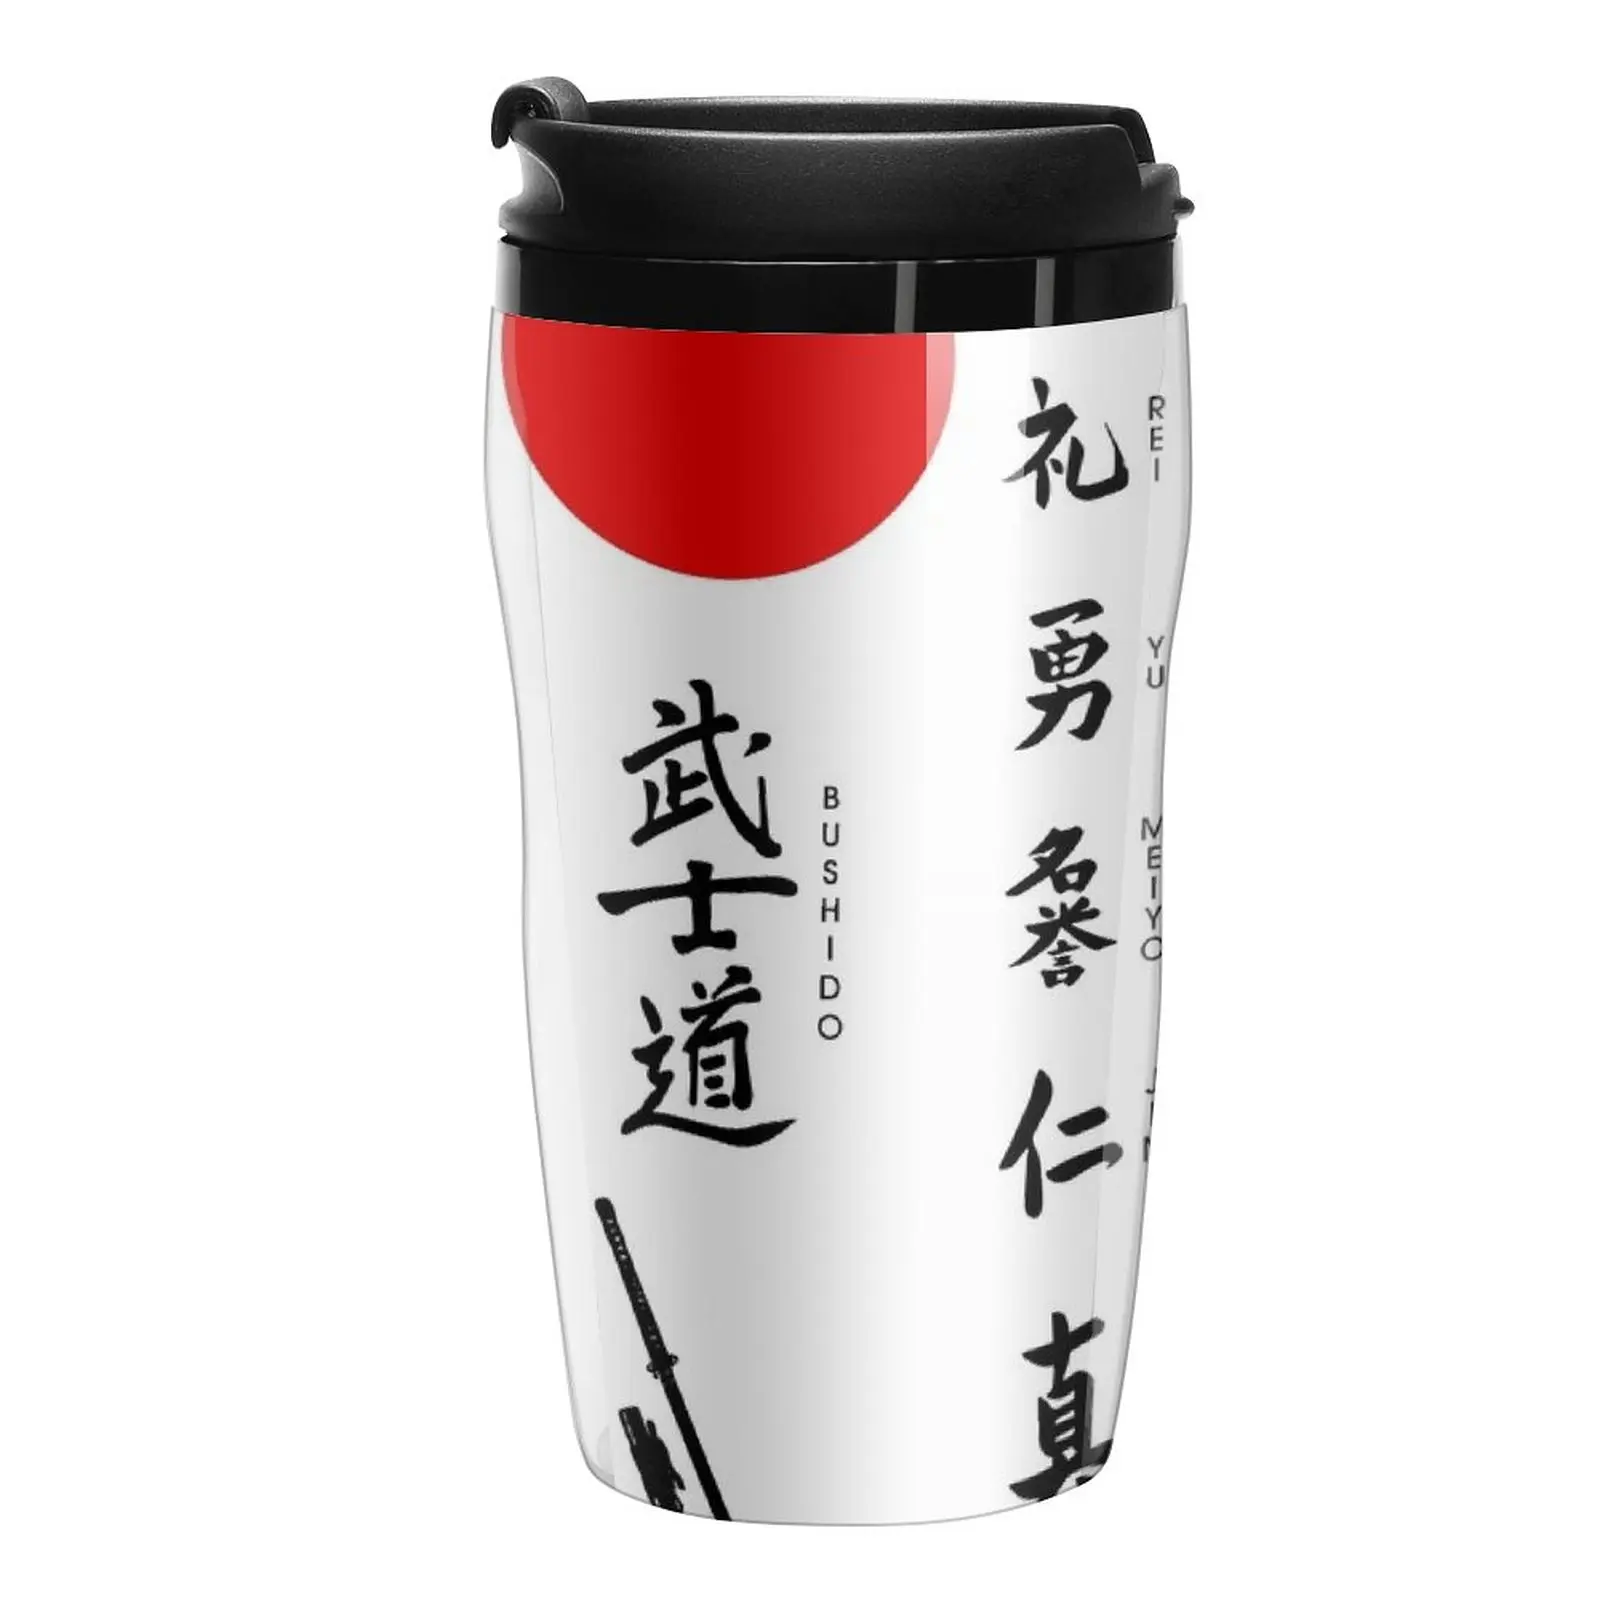 

New Bushido and Japanese Sun Travel Coffee Mug Sets Of Te And Coffee Cups Unusual Tea Cup